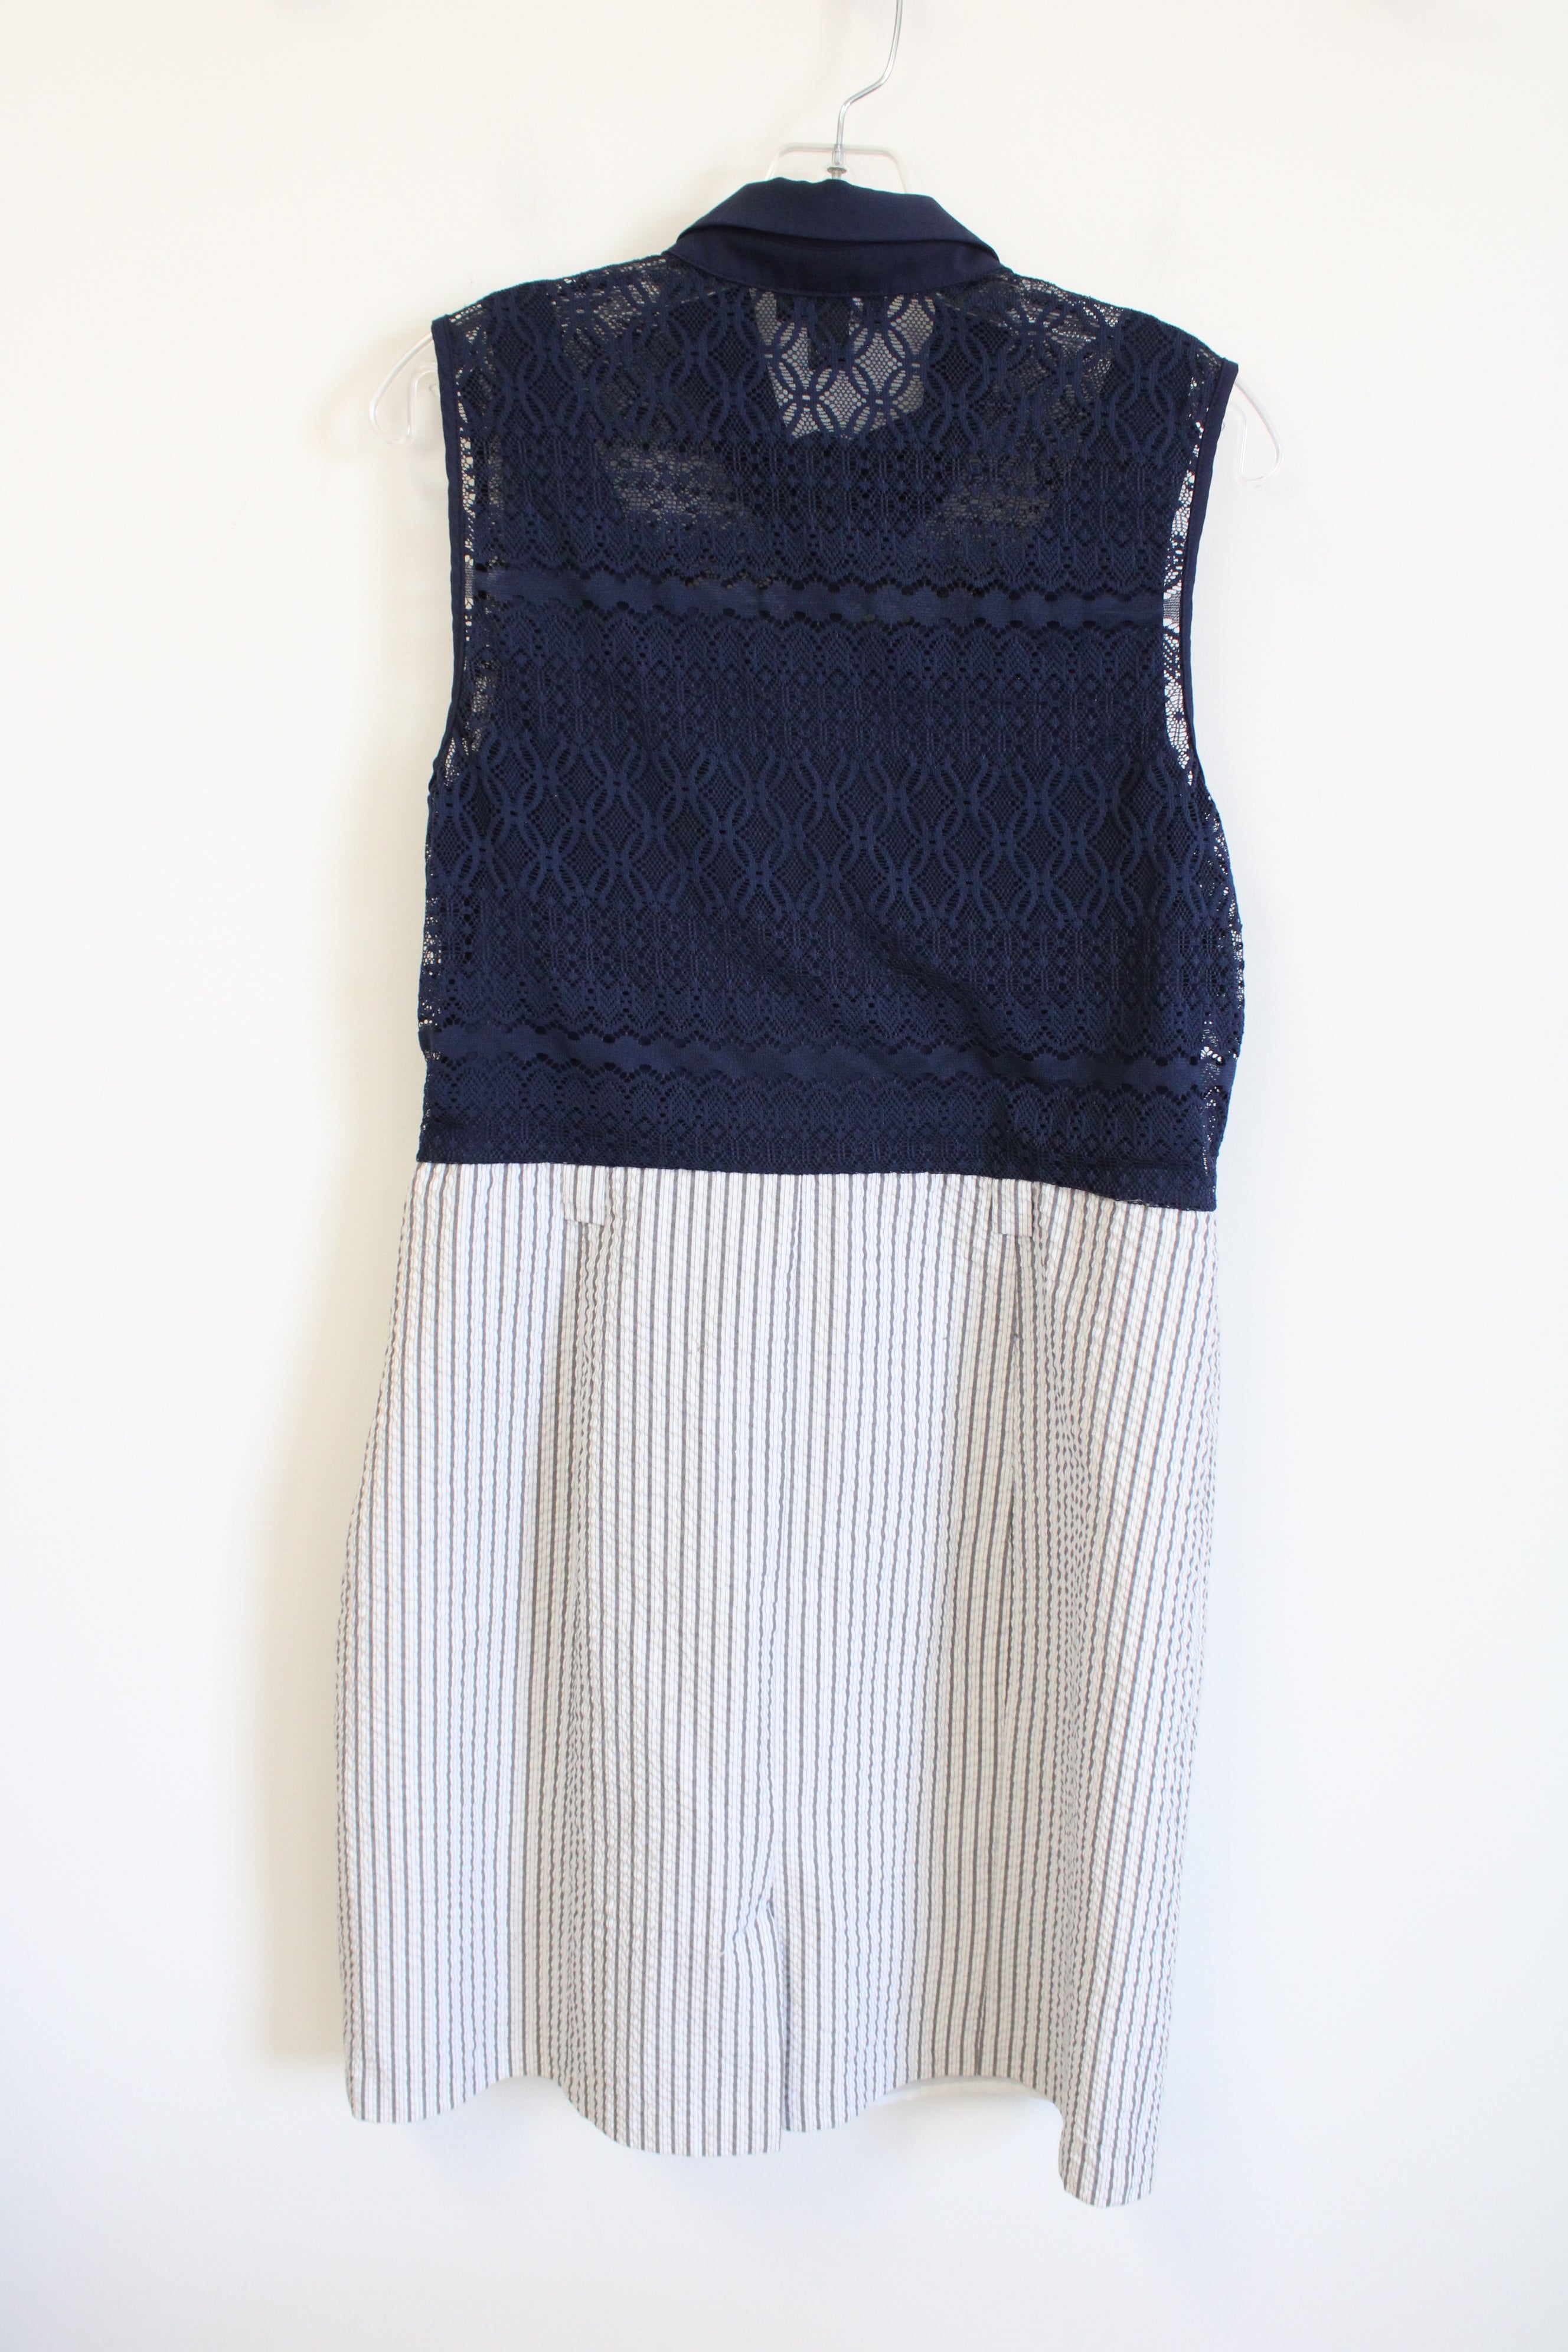 Alyx Navy Blue Gray White Striped Dress | 14